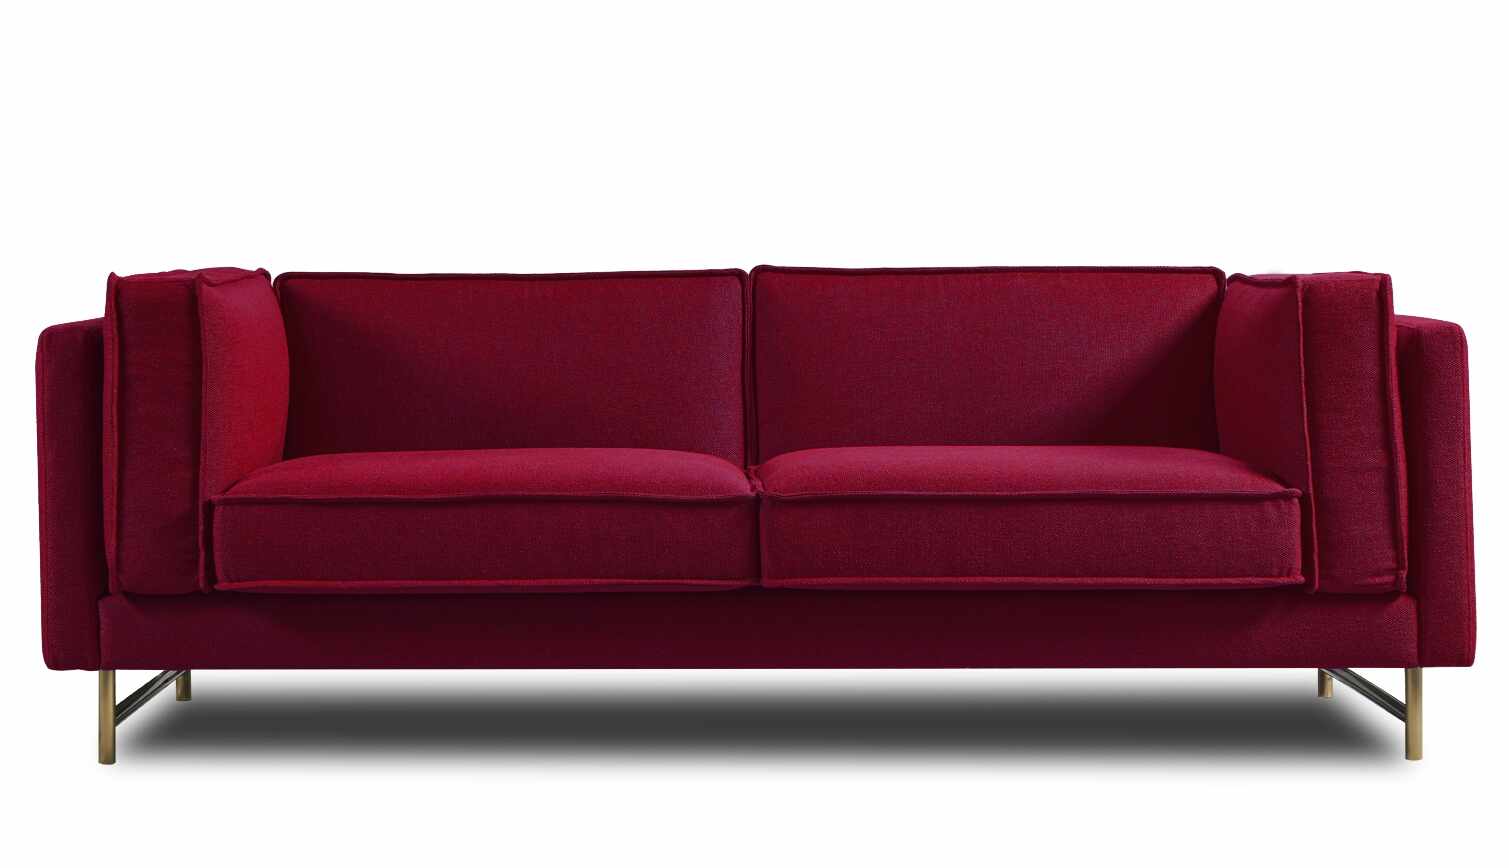 Canapea fixa tapitata cu stofa, 3 locuri Teresa Red, l204xA89xH69 cm